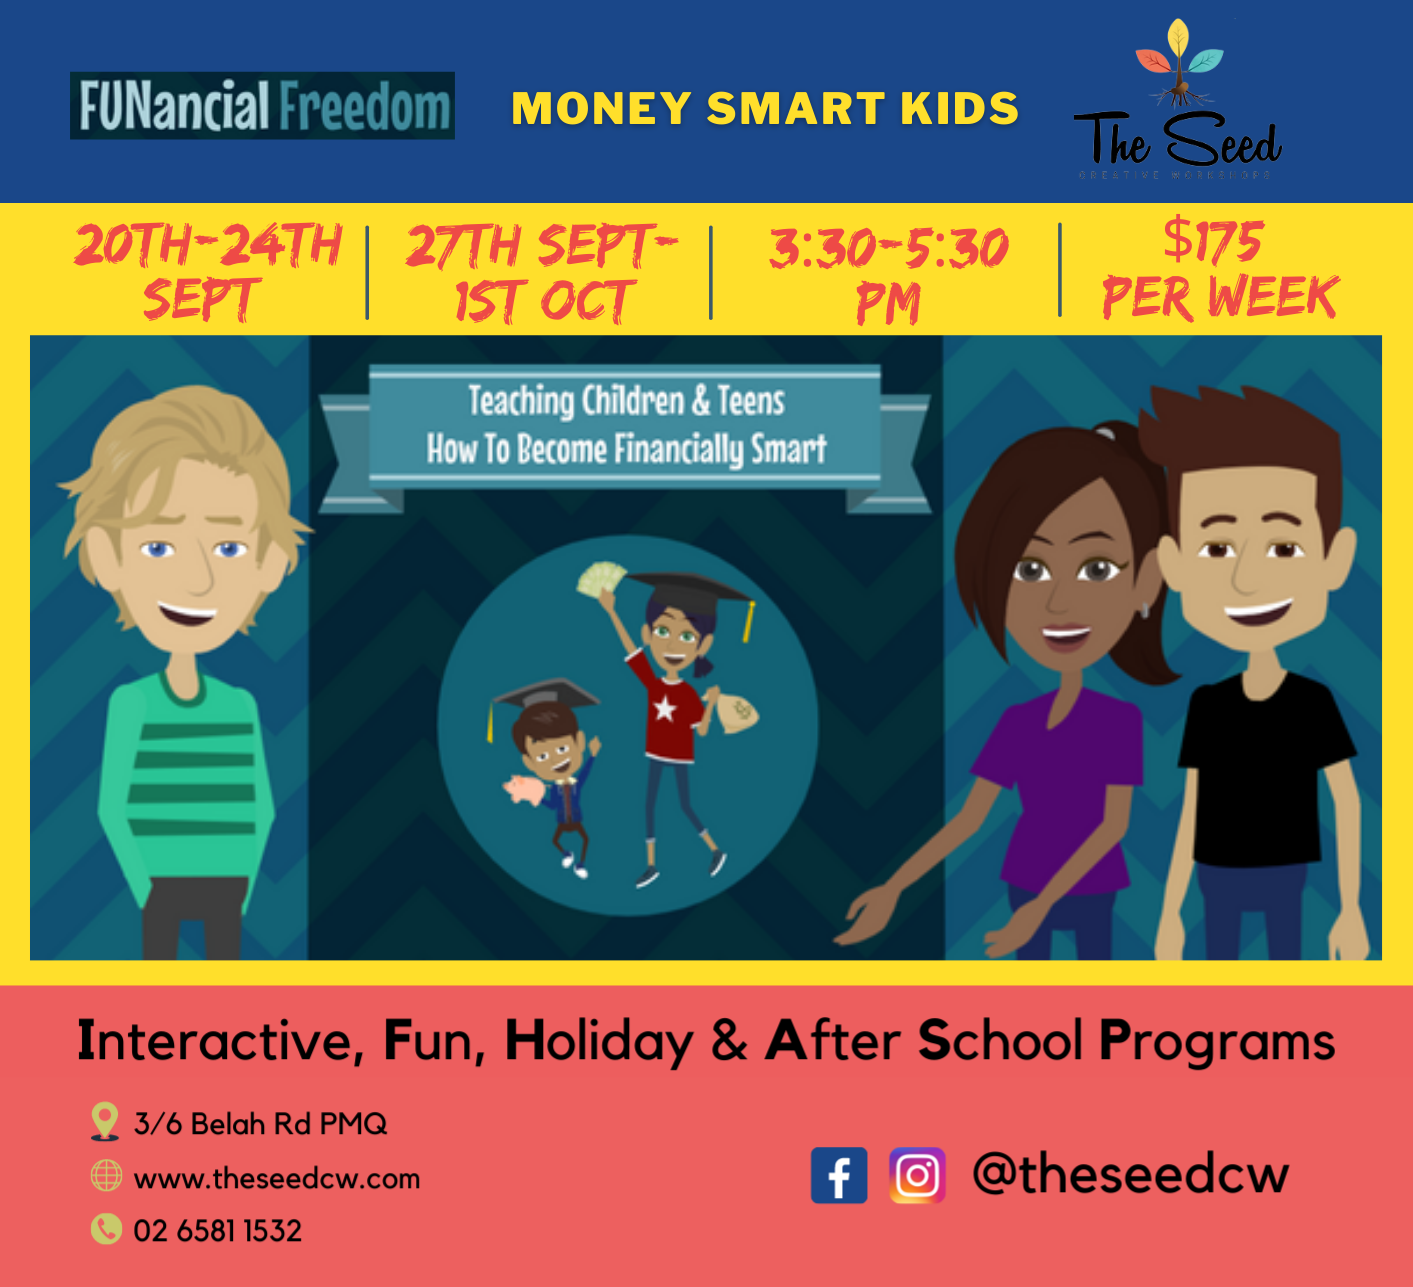 Money Smarts Kids Program: 27th-1st Oct. 3:30-5:30pm